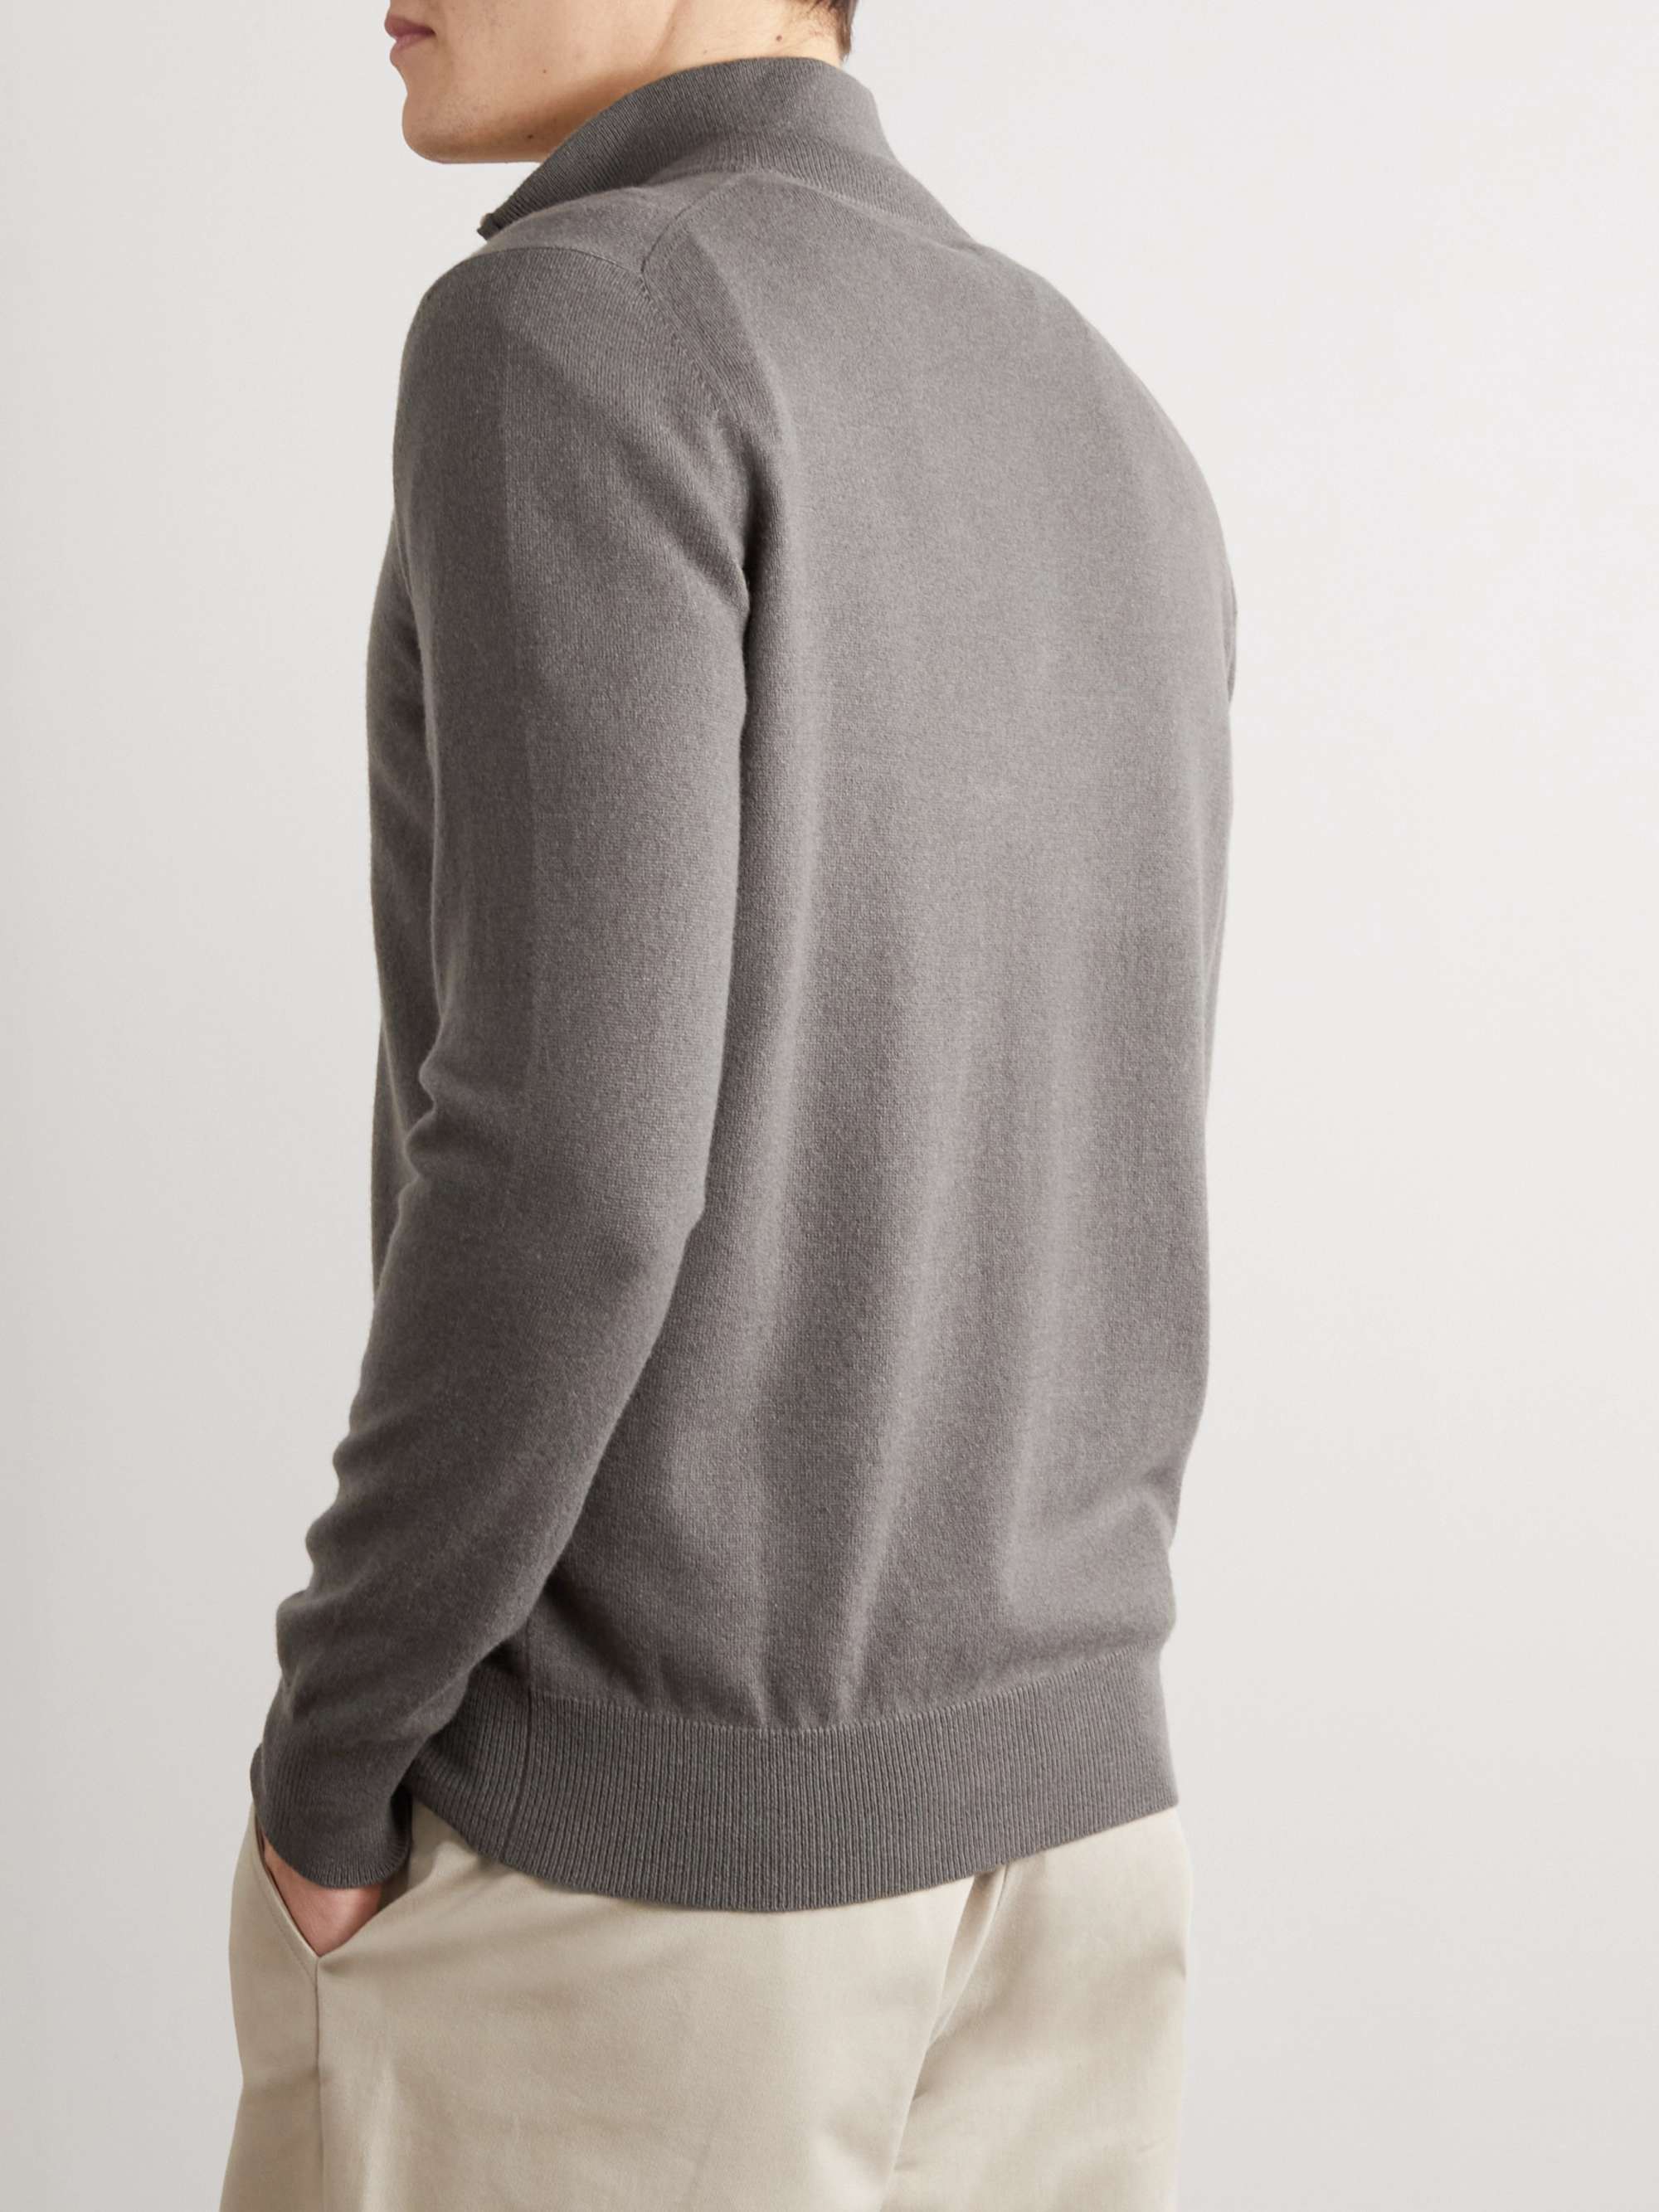 GHIAIA CASHMERE Cashmere Half-Zip Sweater